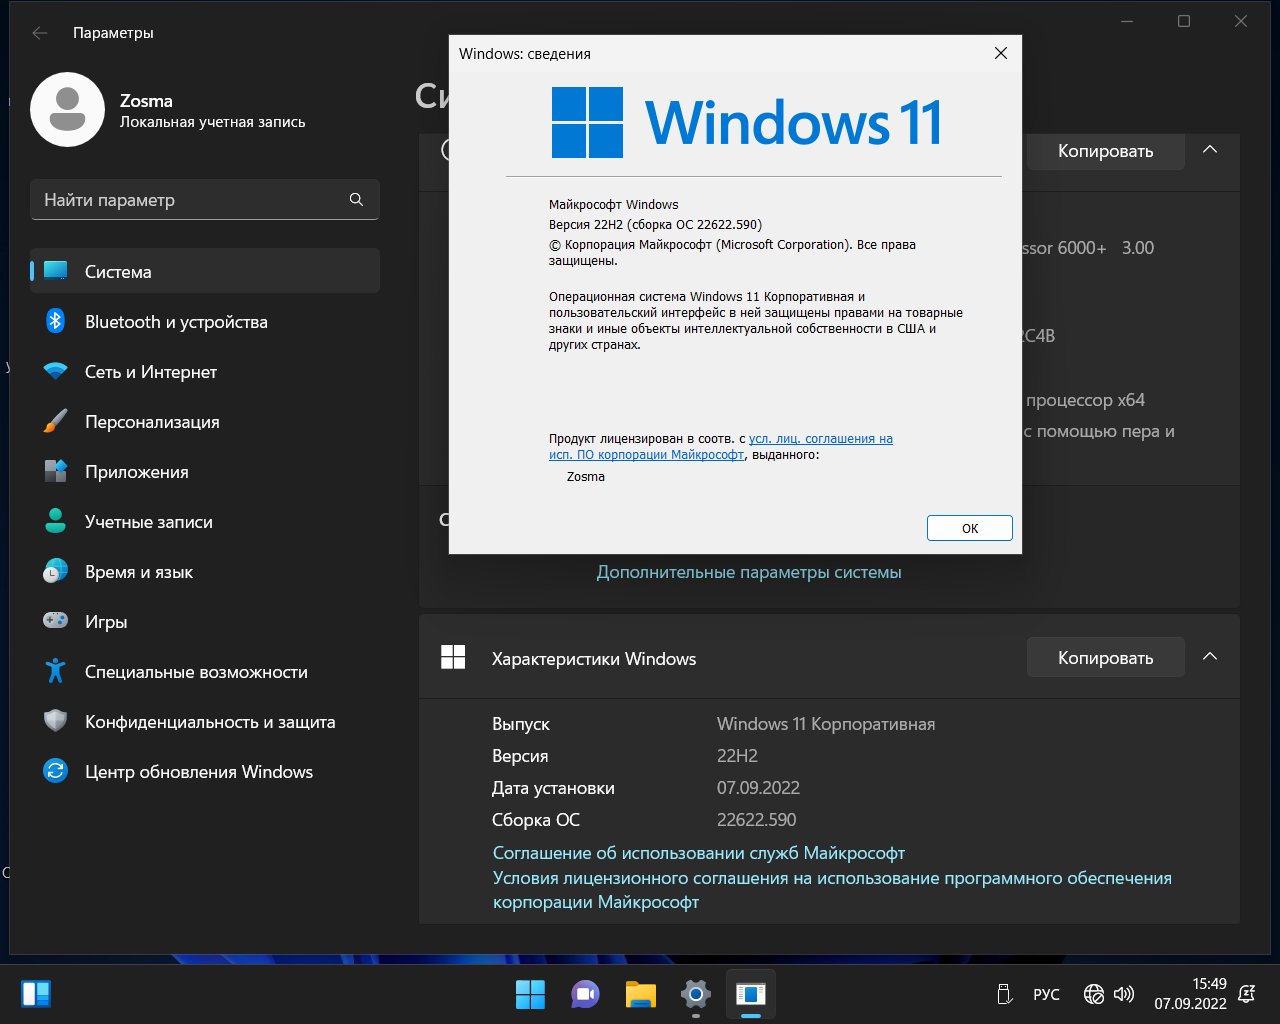 Windows 11 cmd. Windows 11 IOT Enterprise. Windows 11 Enterprise IOT x64 Micro 22h2 build 22598.200 by Zosma коды. Версии виндовс 10. Удаленный рабочий стол программа.